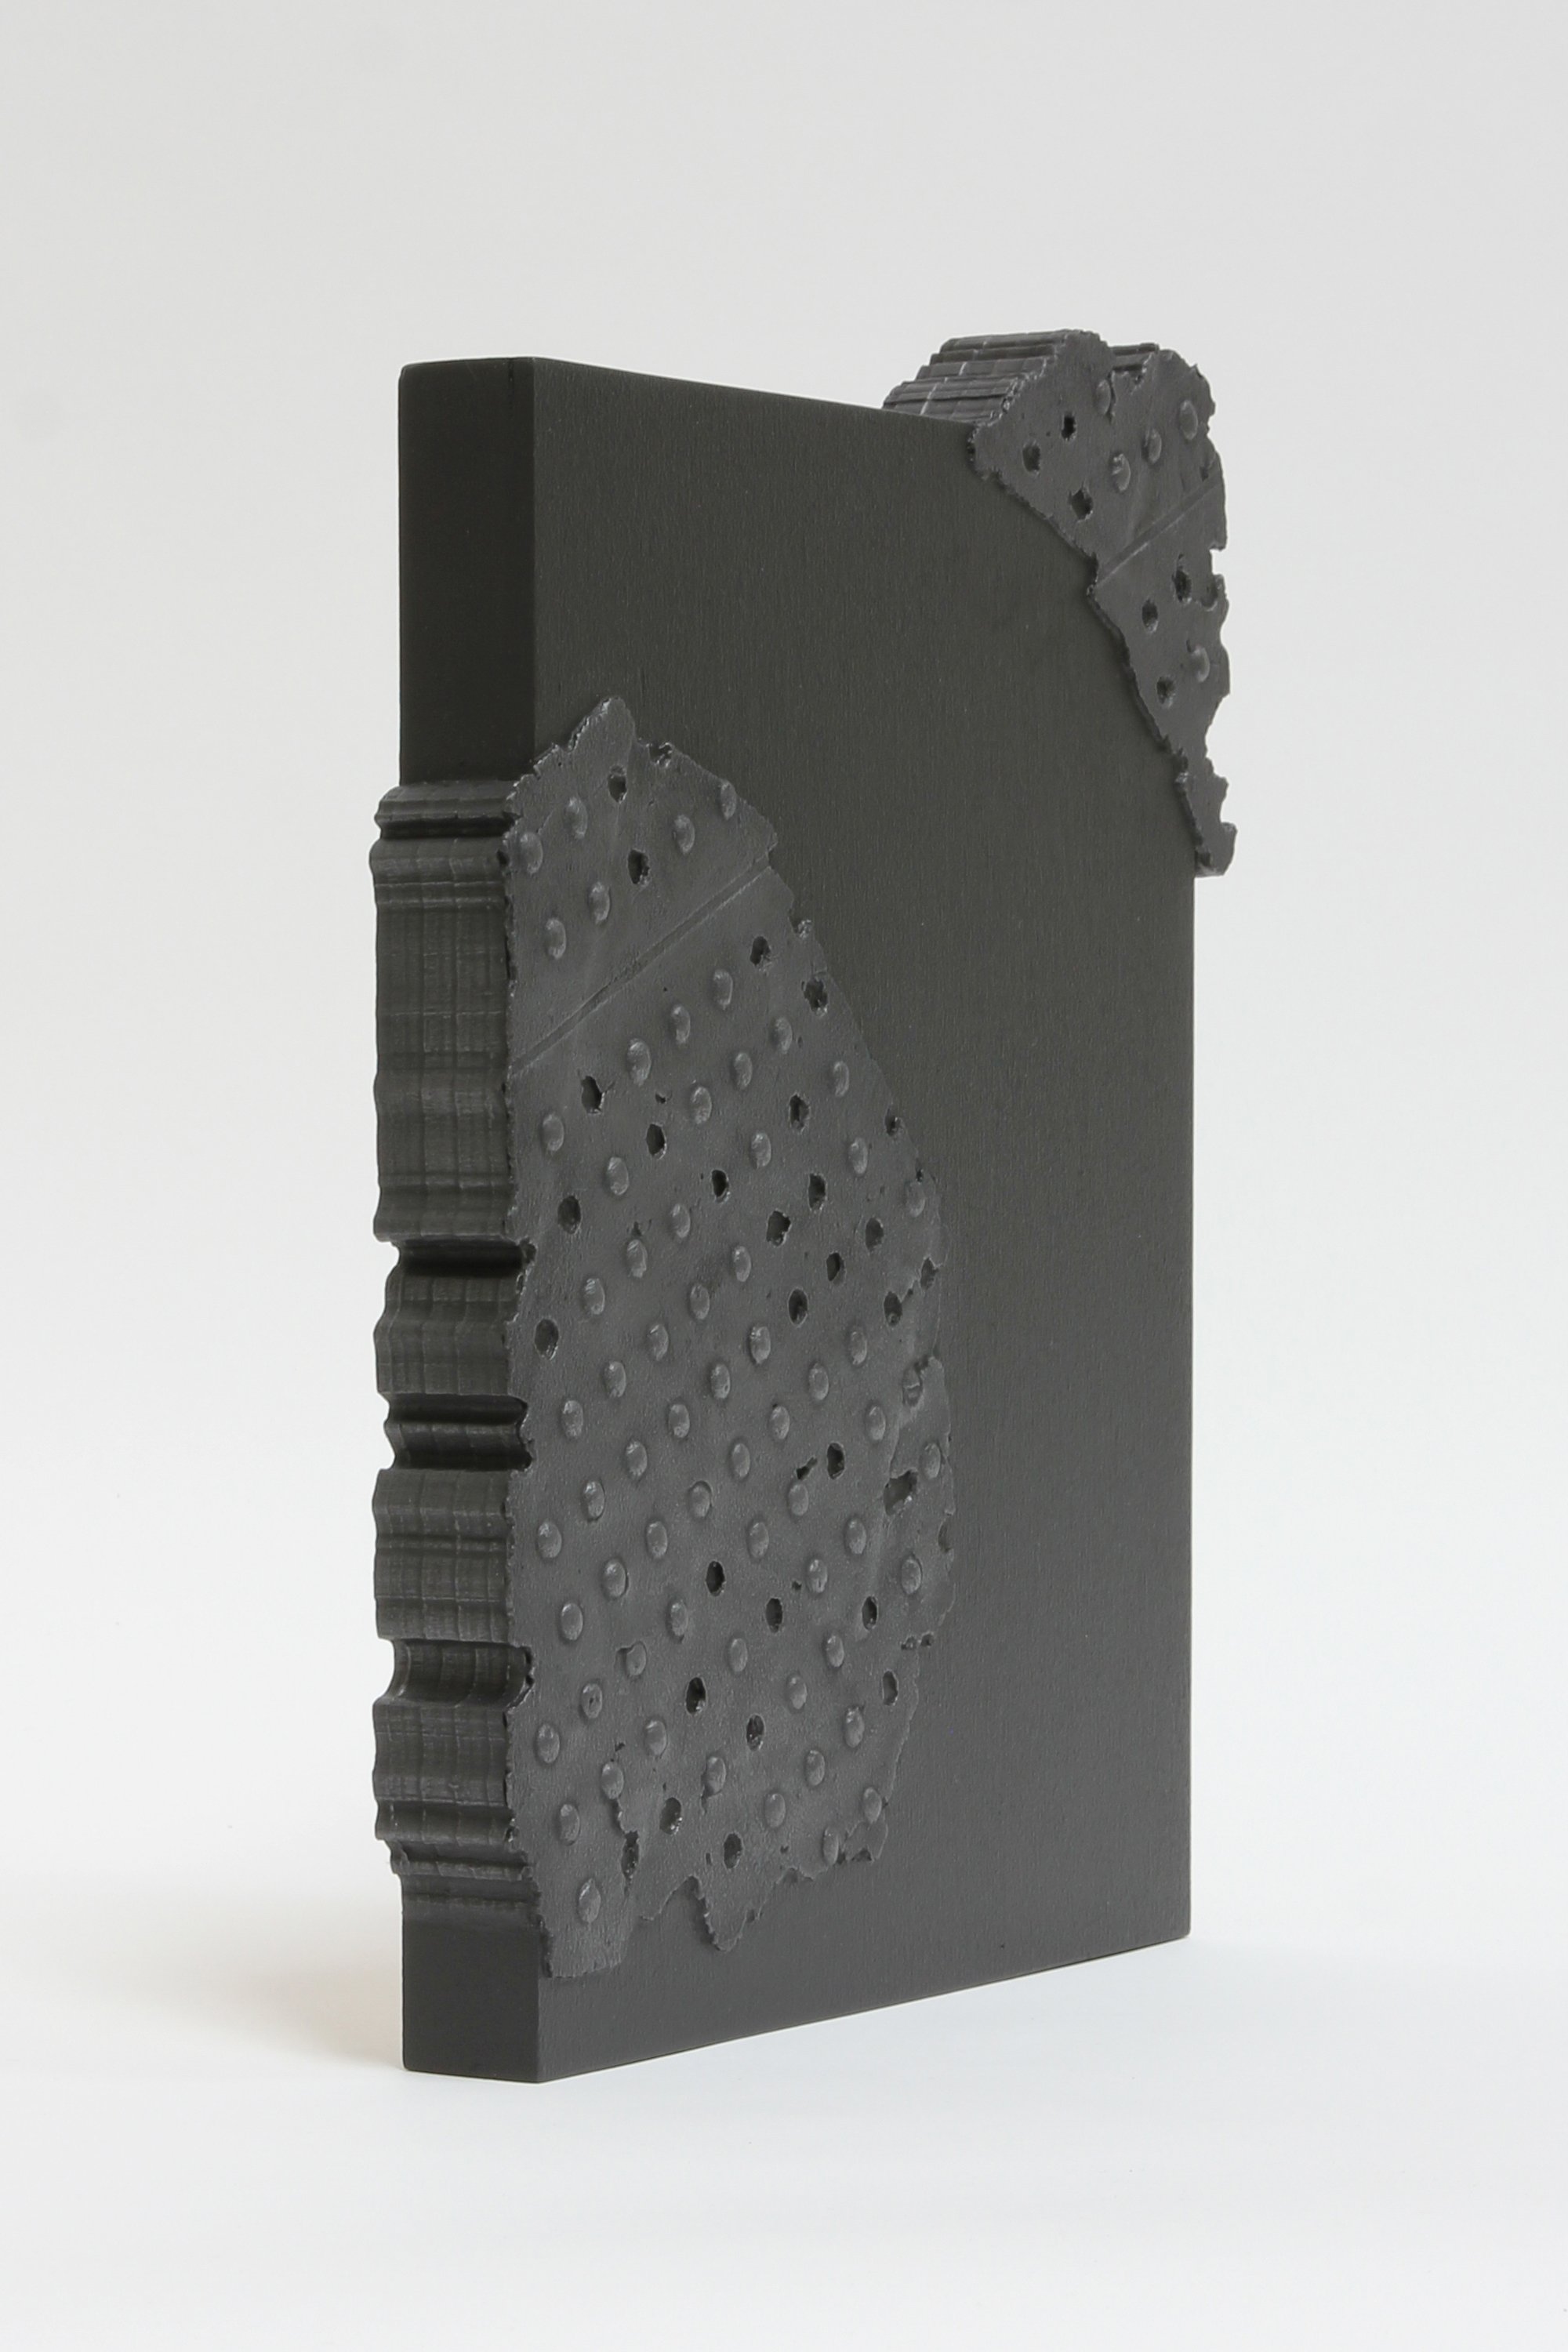   Dark Split  Found rubber, acrylic, graphite, adhesive and varnish on panel 11.5” x 9” x 1” / 2022 